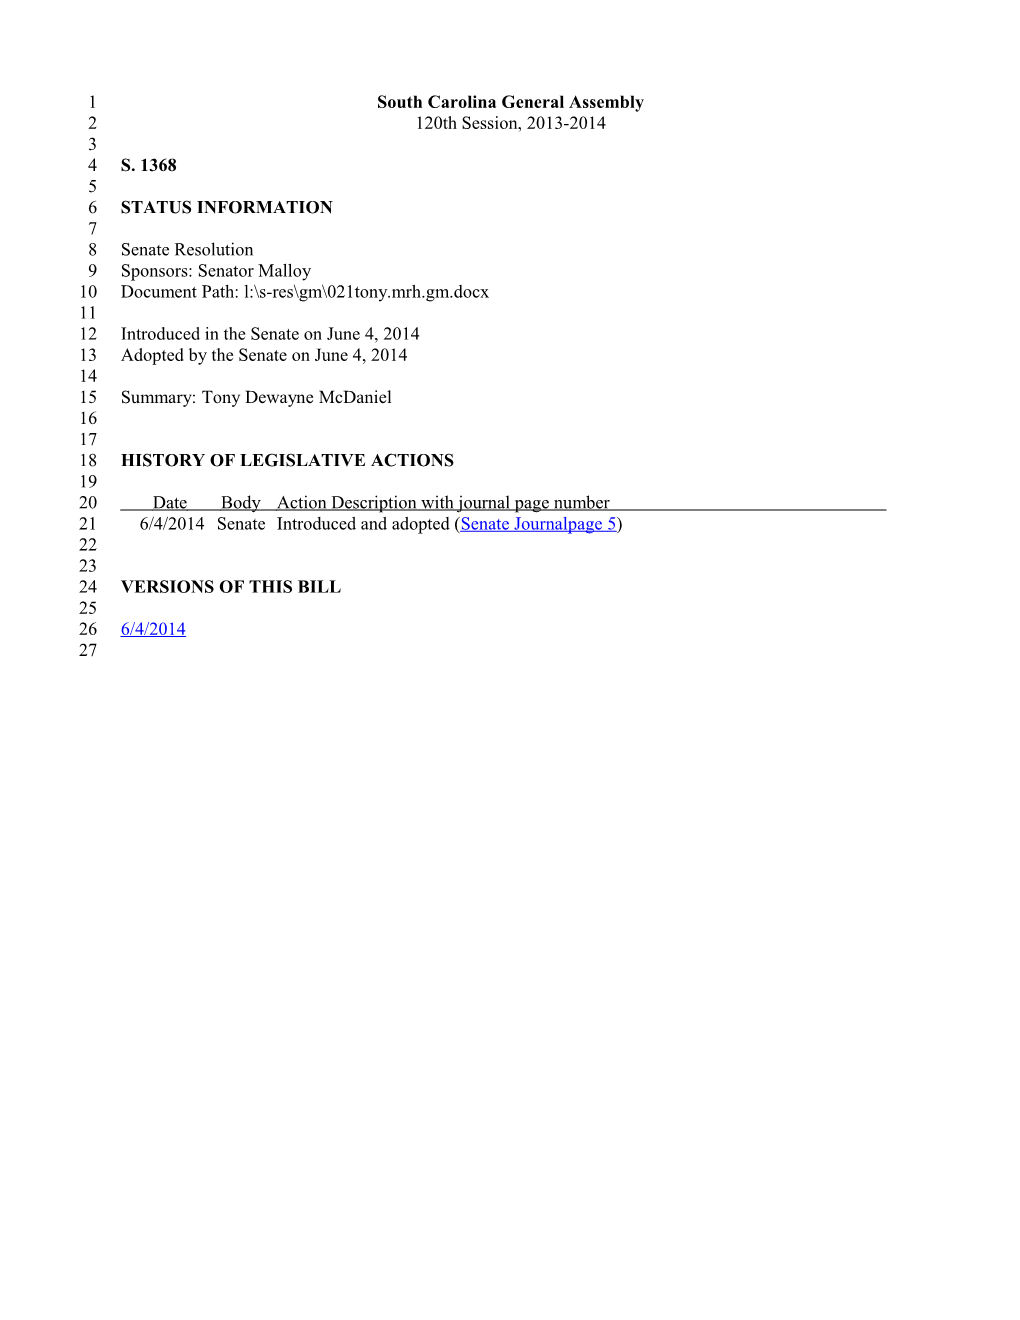 2013-2014 Bill 1368: Tony Dewayne Mcdaniel - South Carolina Legislature Online